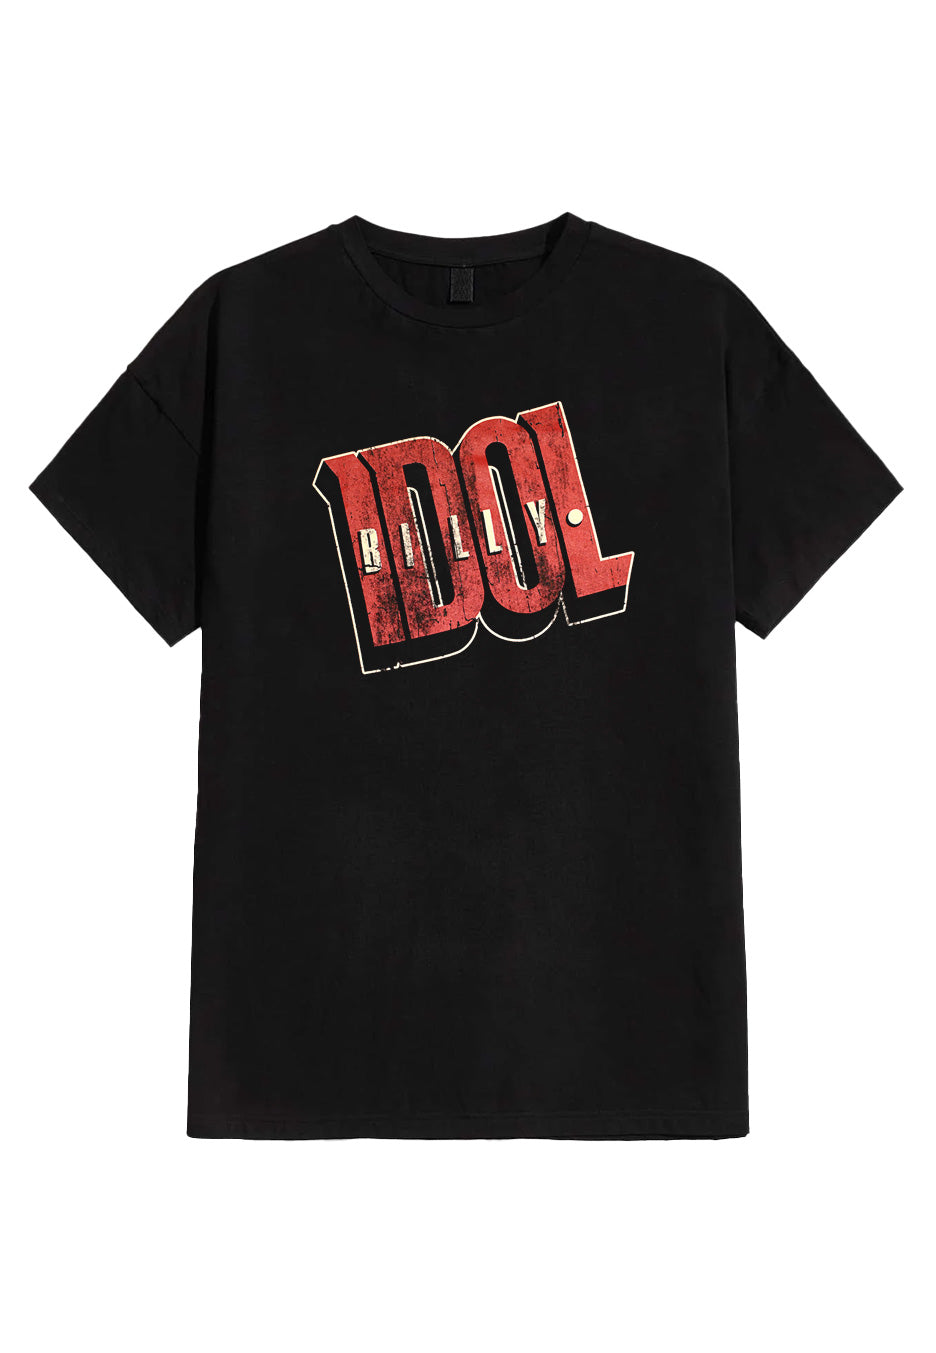 Billy Idol - Vintage Logo - T-Shirt